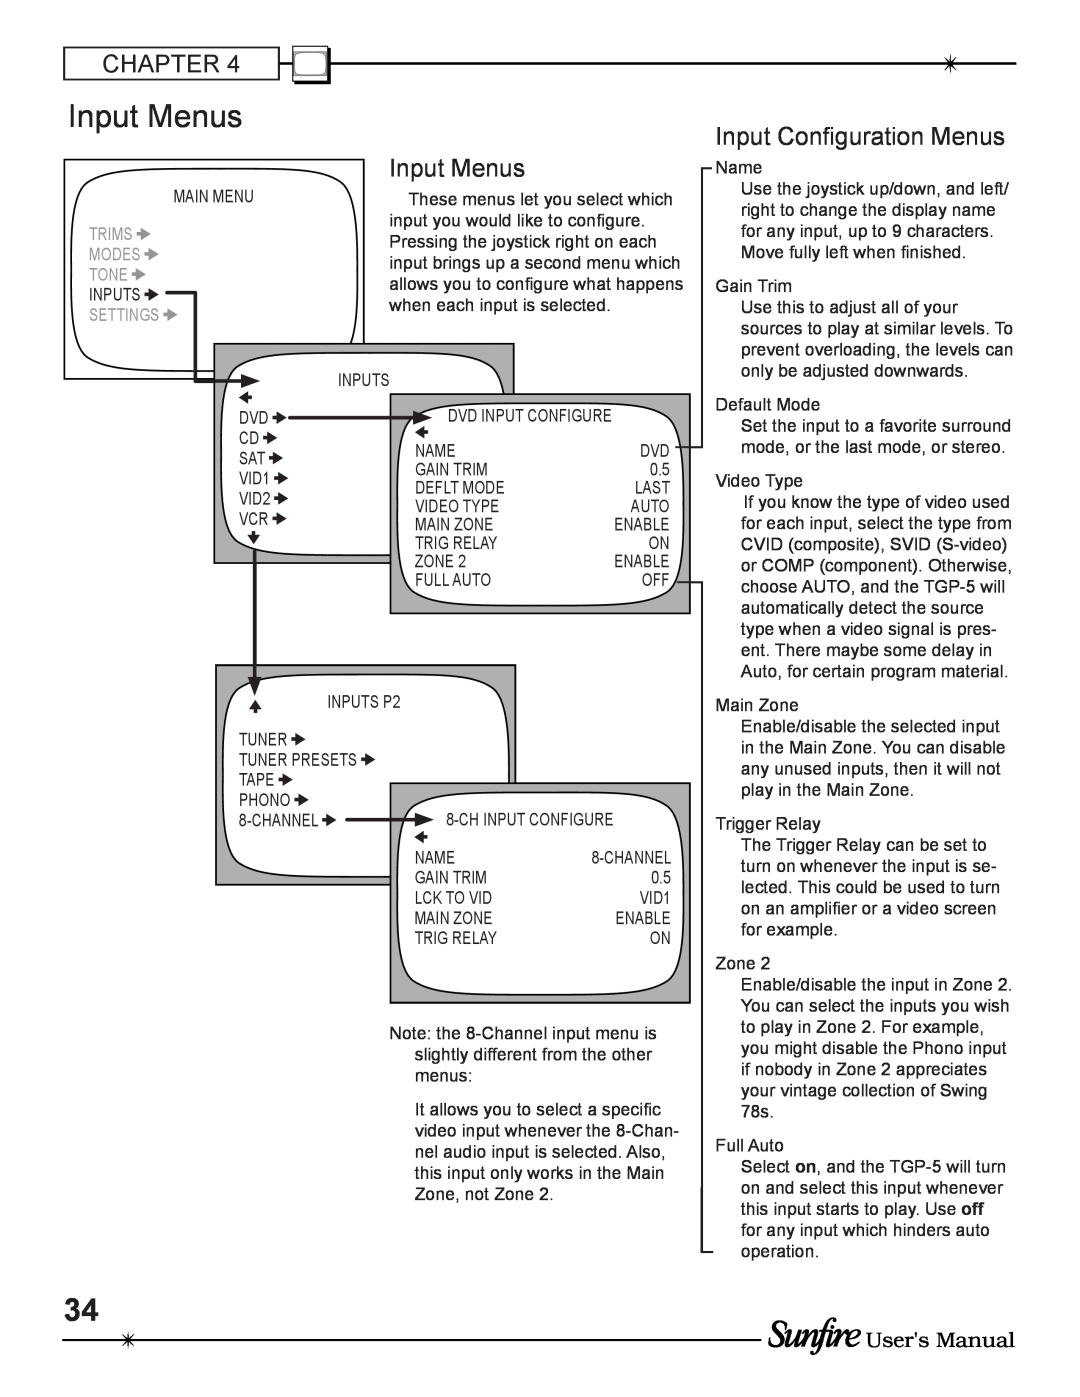 Sunfire TGP-5(E) manual Input Menus, Chapter, Input Conﬁguration Menus, Users Manual, Trims Modes Tone, Settings 